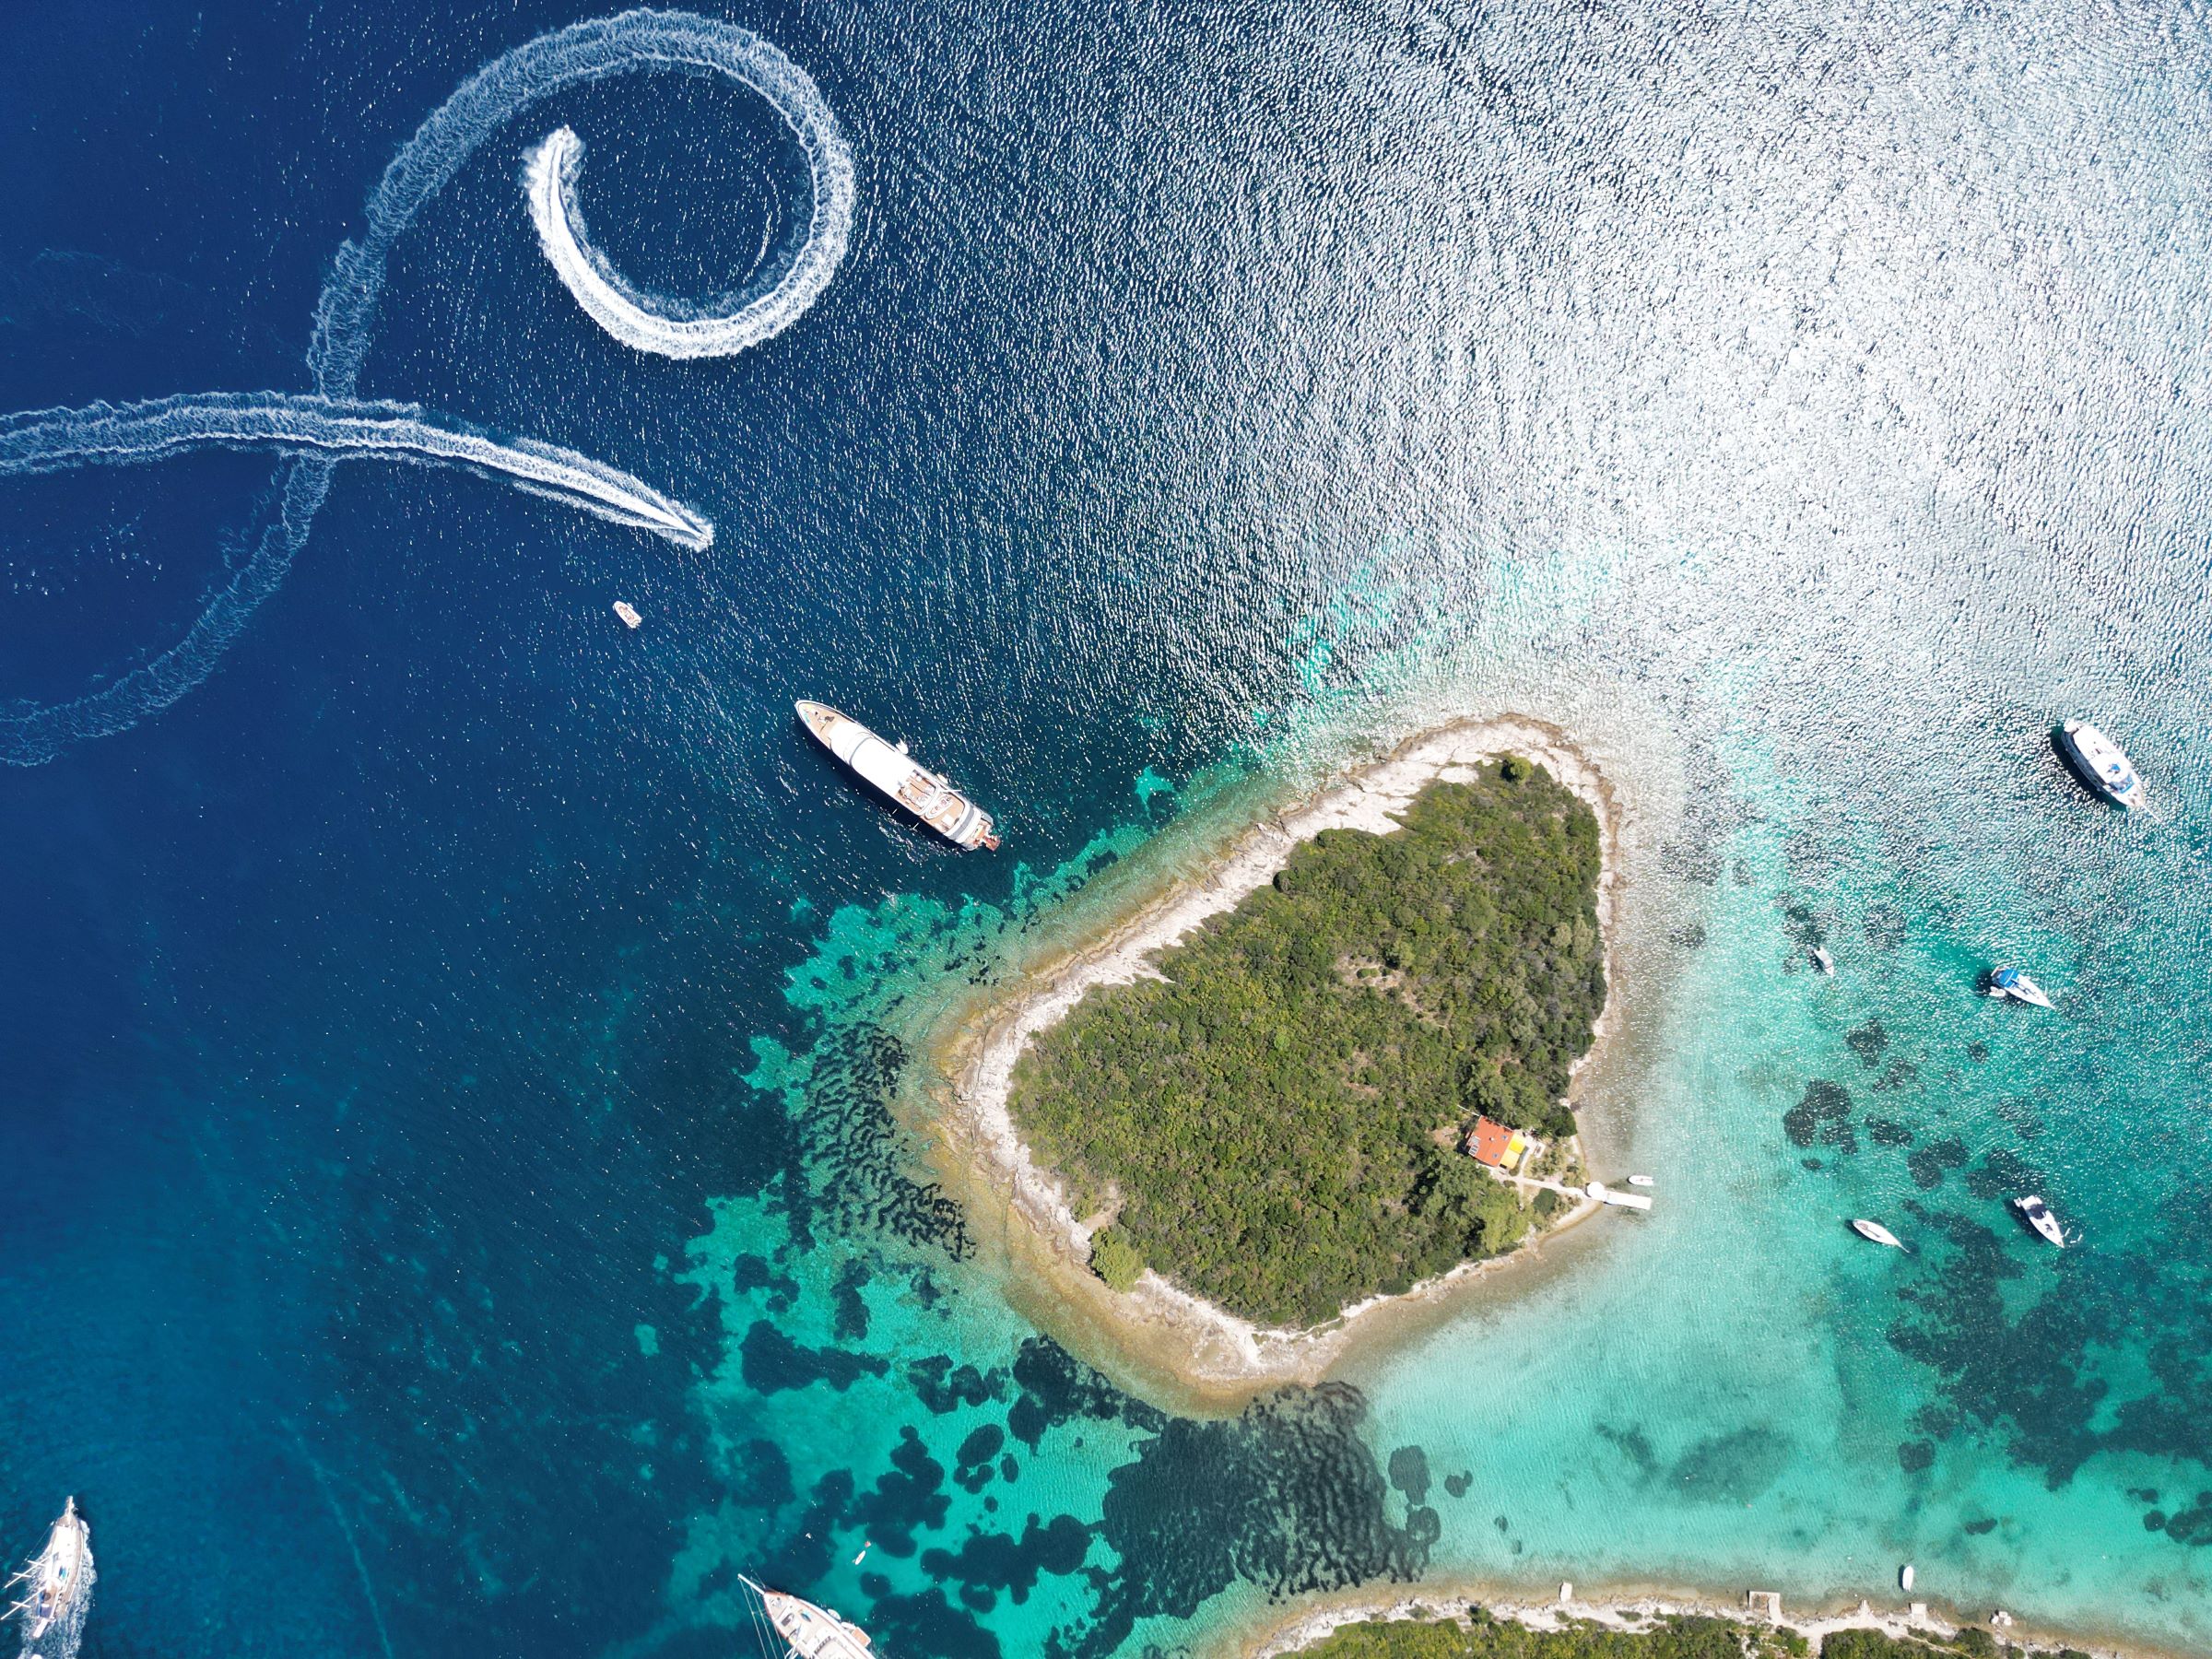 Croatia Family Yacht Charter Vacation - Why Book a Family Yacht Holiday